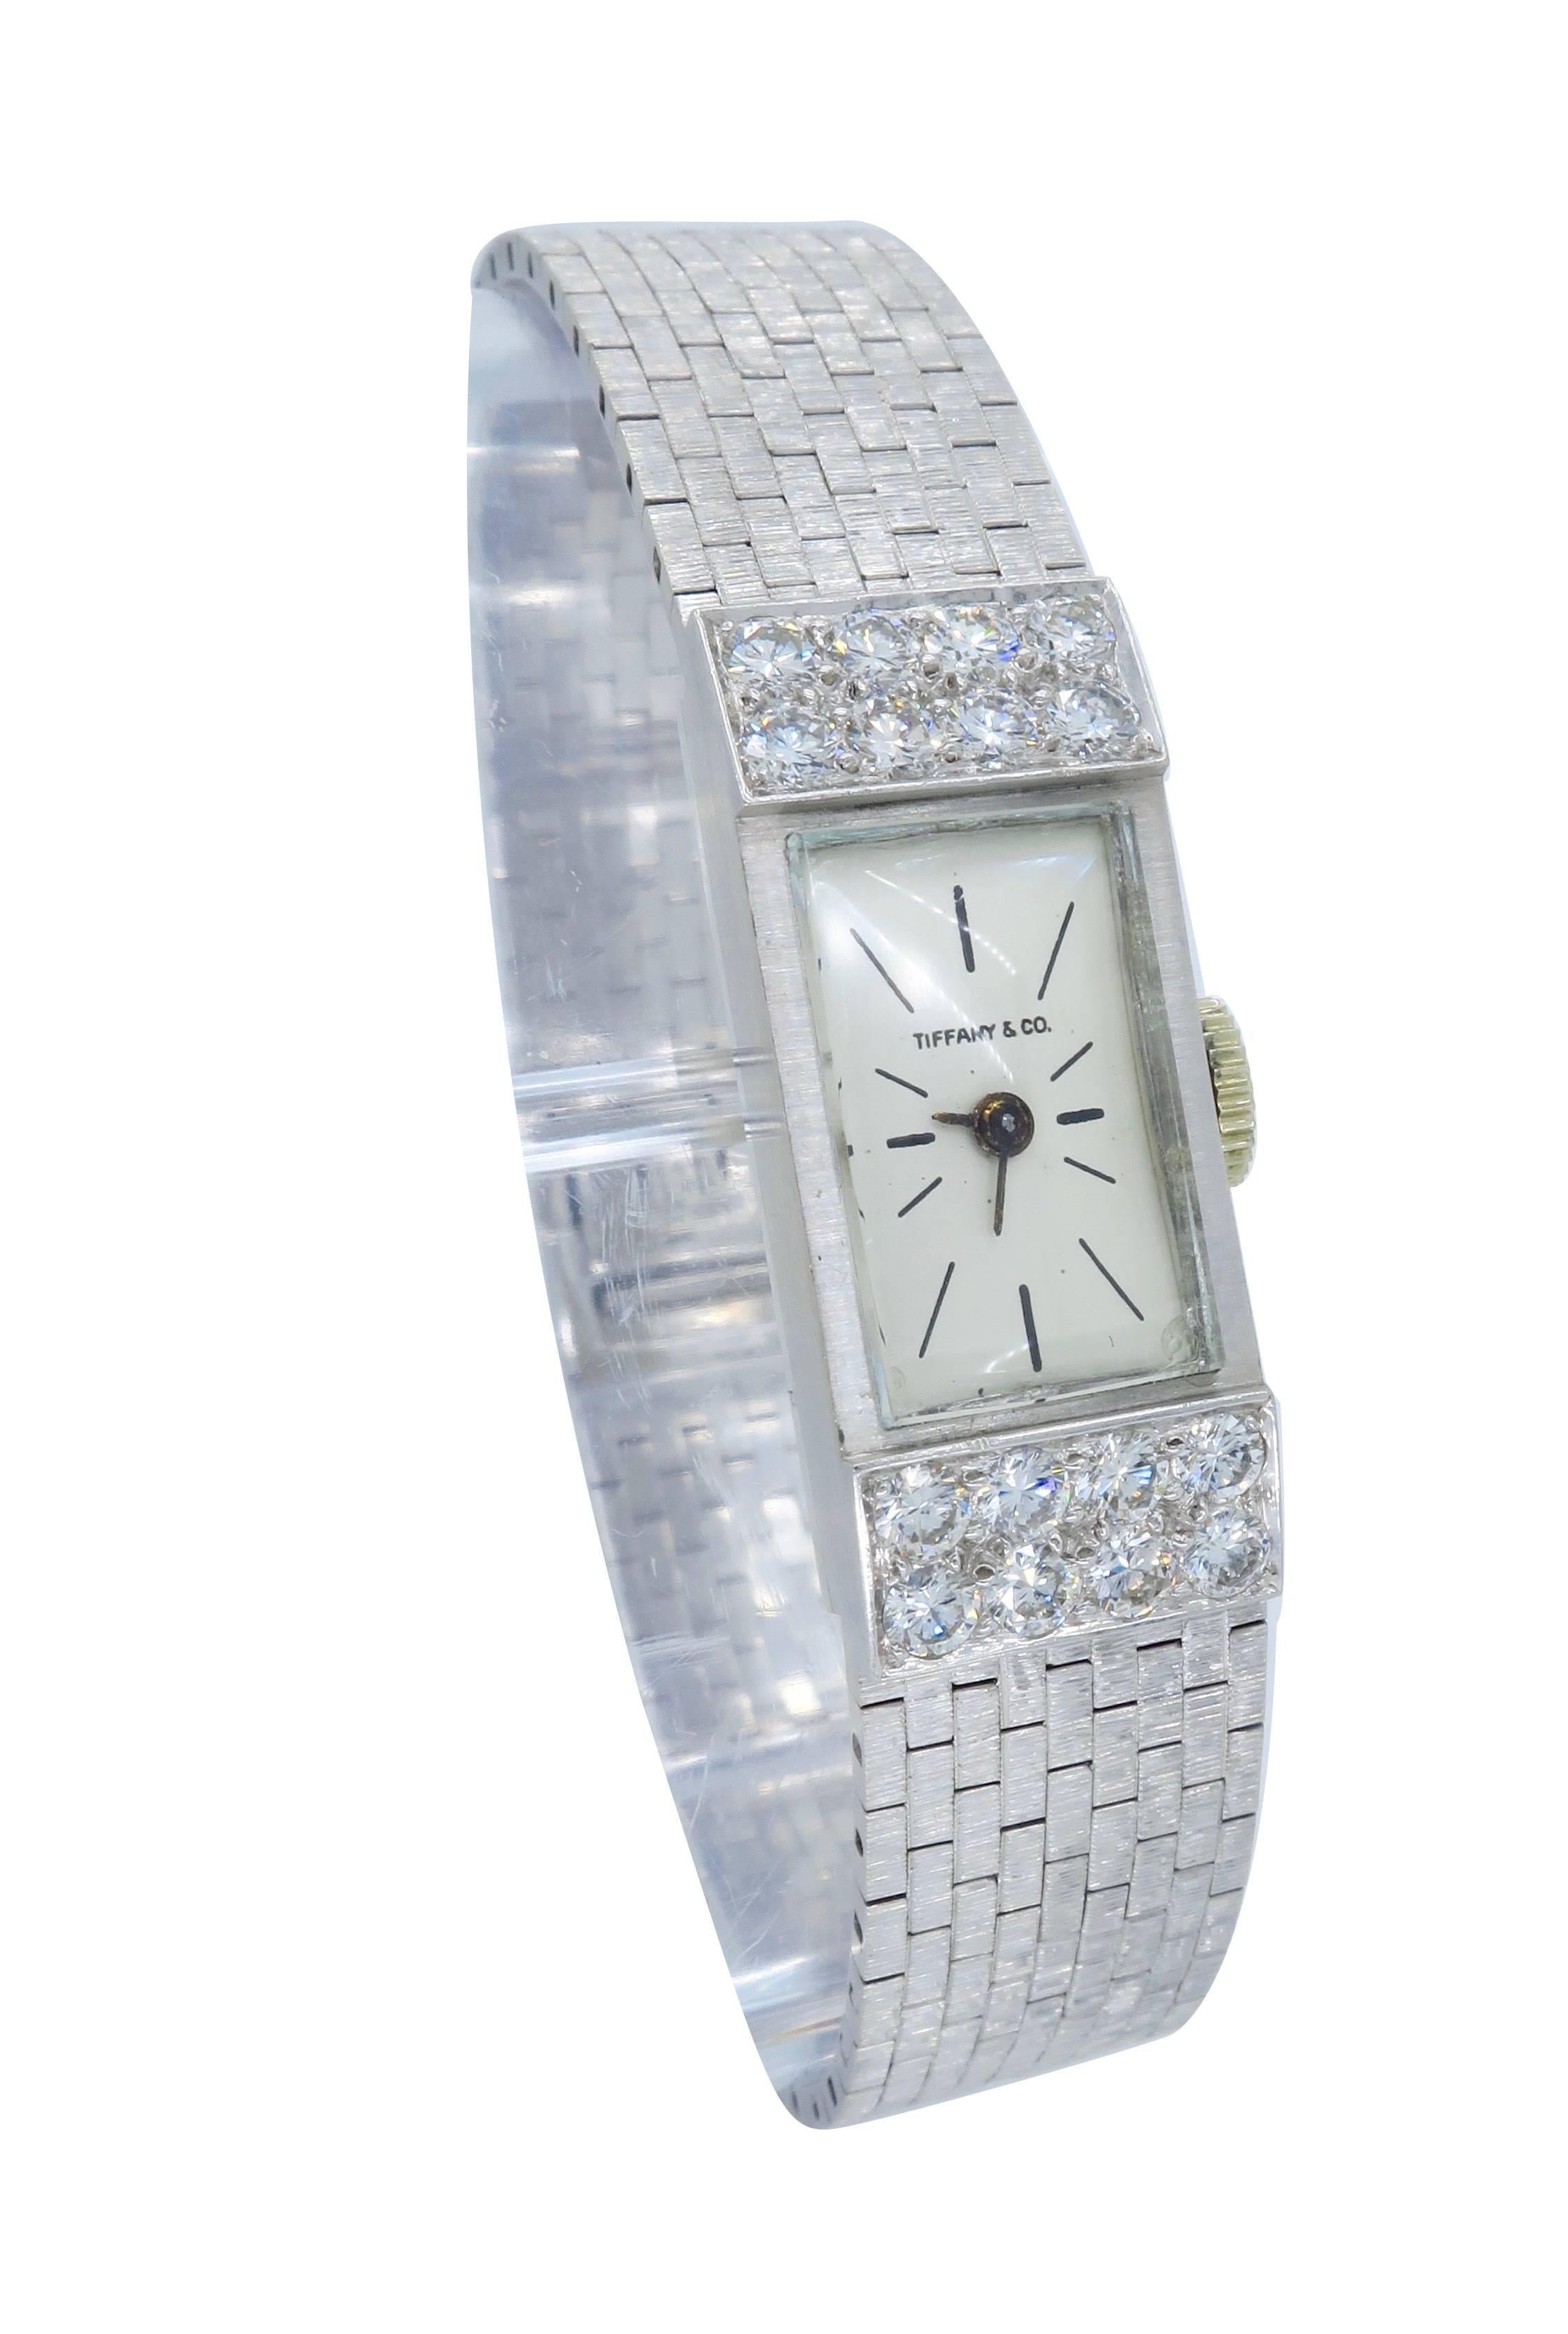 Tiffany & Co. 14 Karat White Gold Diamond Watch 7